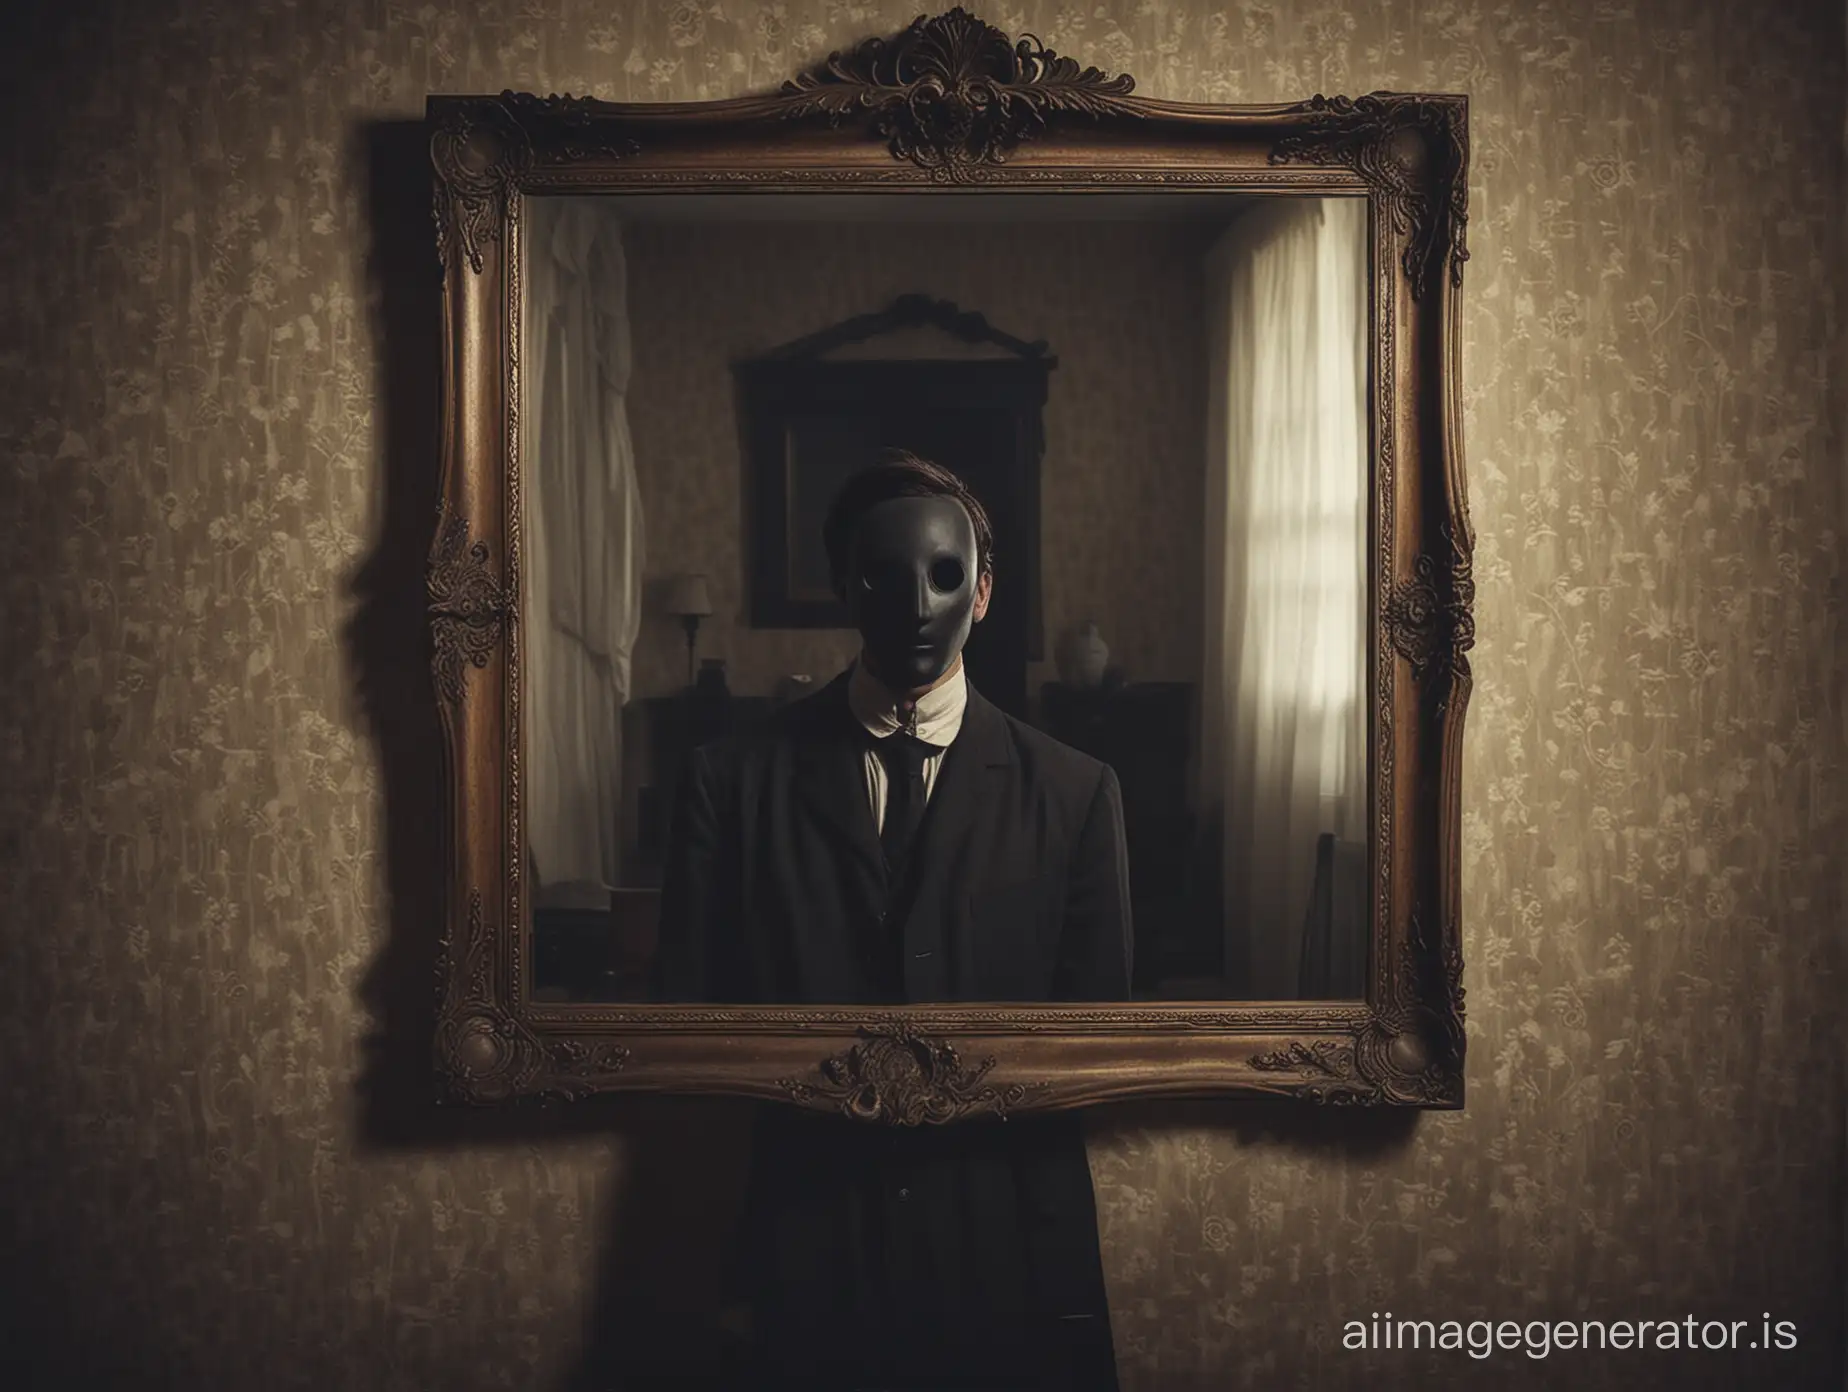 Eerie-Faceless-Man-in-Victorian-Room-Disturbing-Folk-Horror-Scene